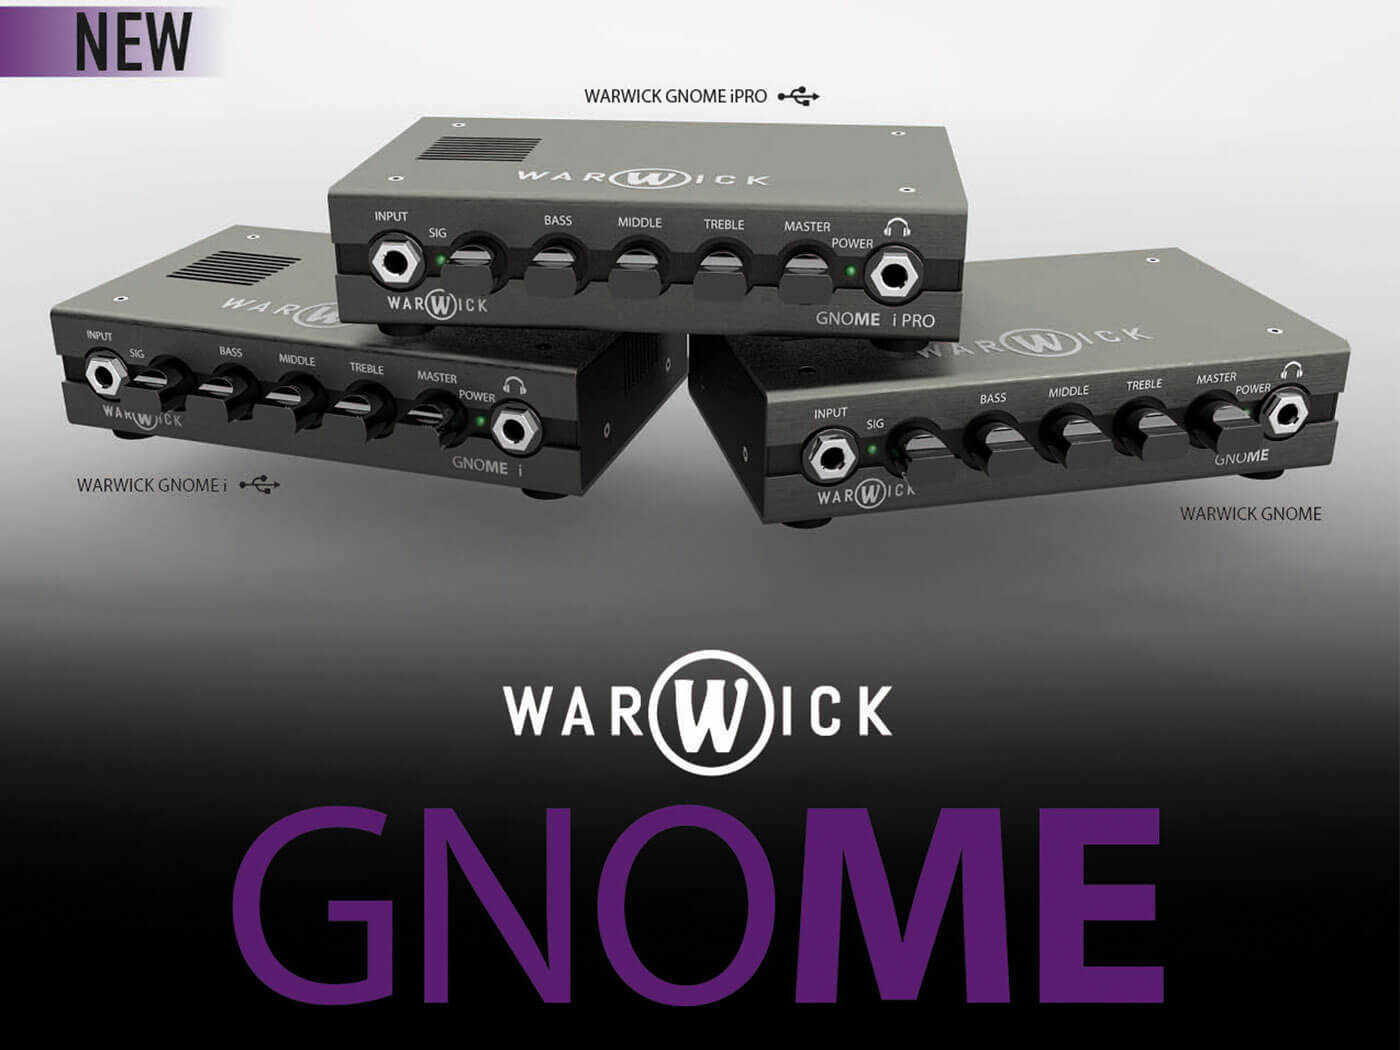 The Warwick Gnone